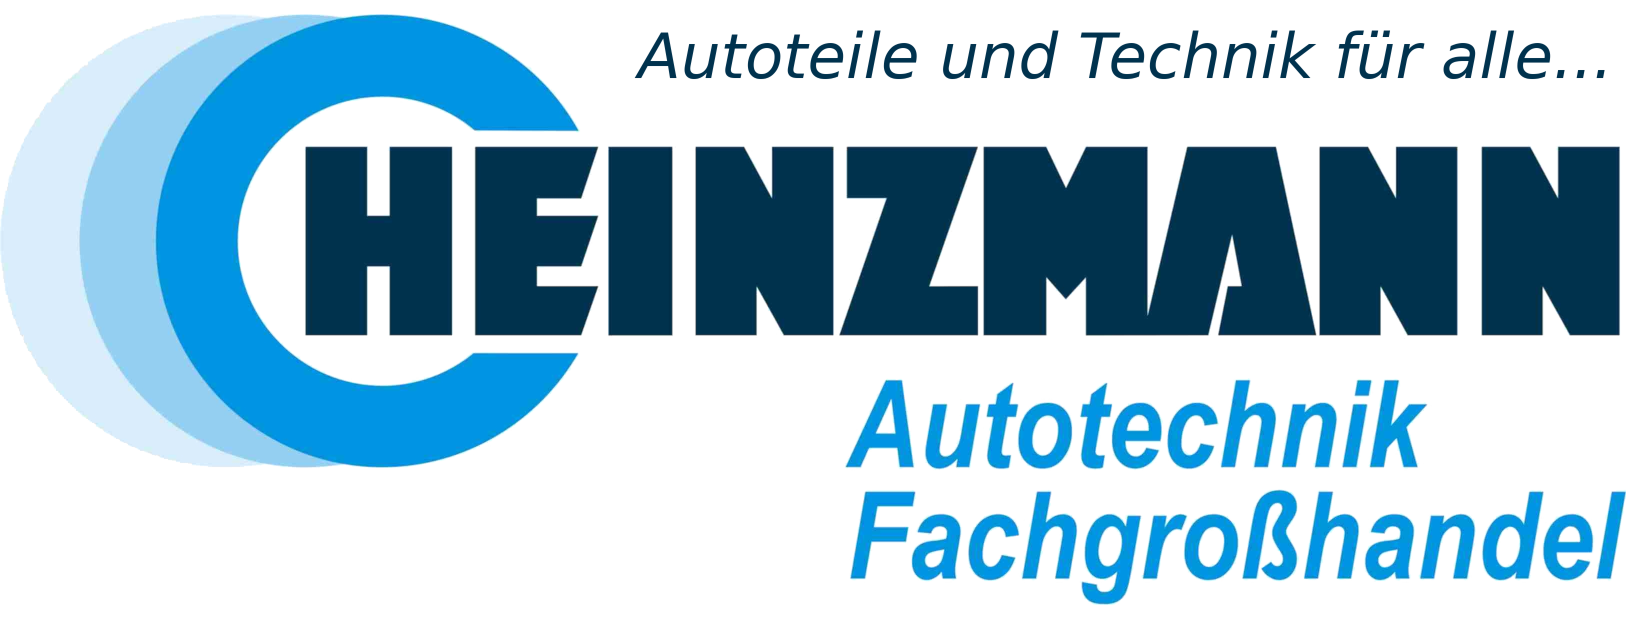 Heinzmann - Autotechnik Fachgoßhandel - Logo 1626x622